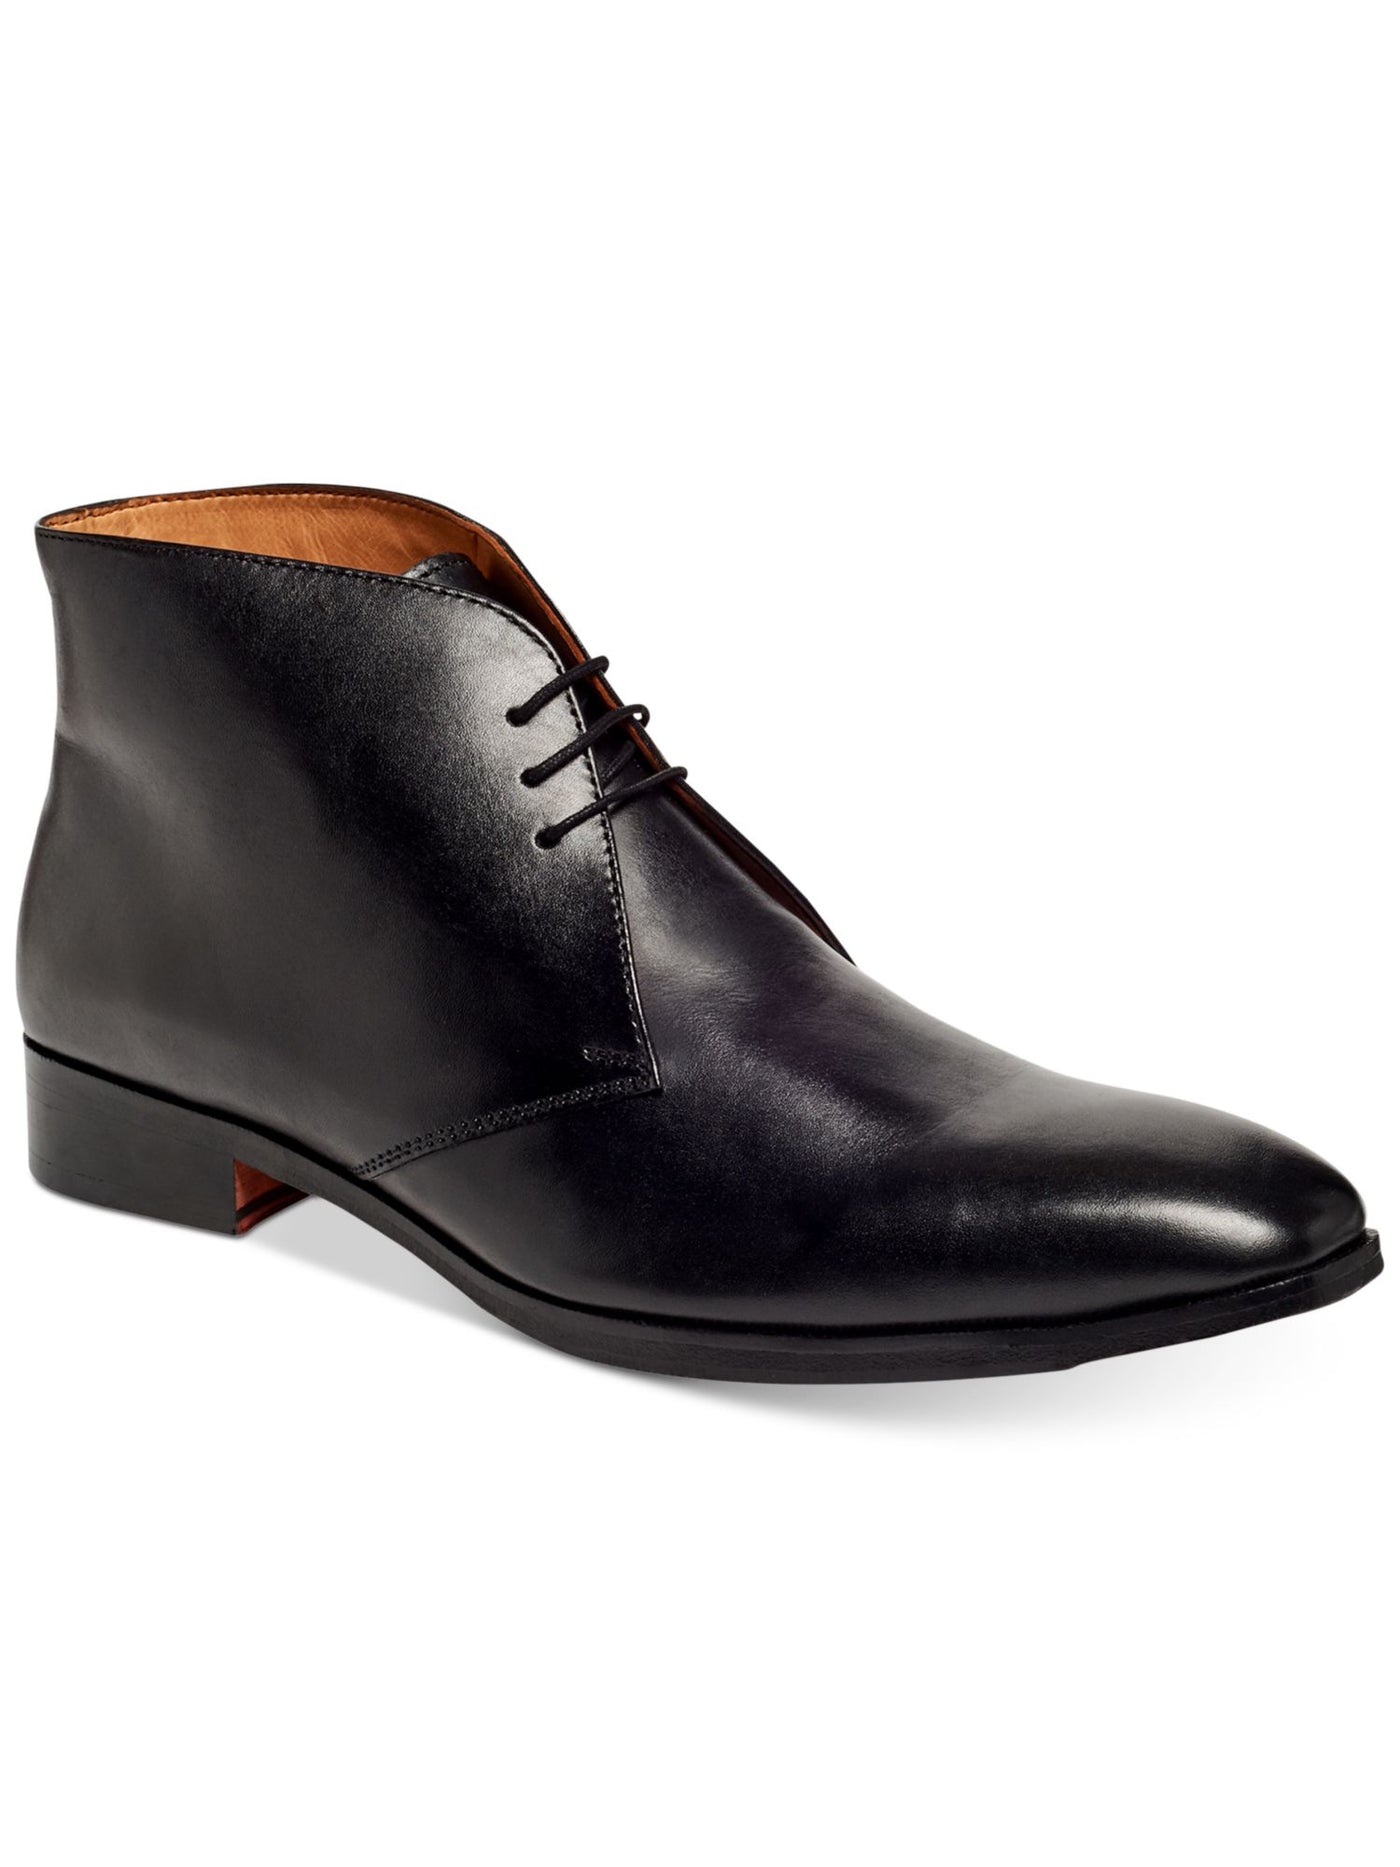 CARLOS BY CARLOS SANTANA Mens Black Comfort Corazon Almond Toe Lace-Up Leather Chukka Boots 7.5